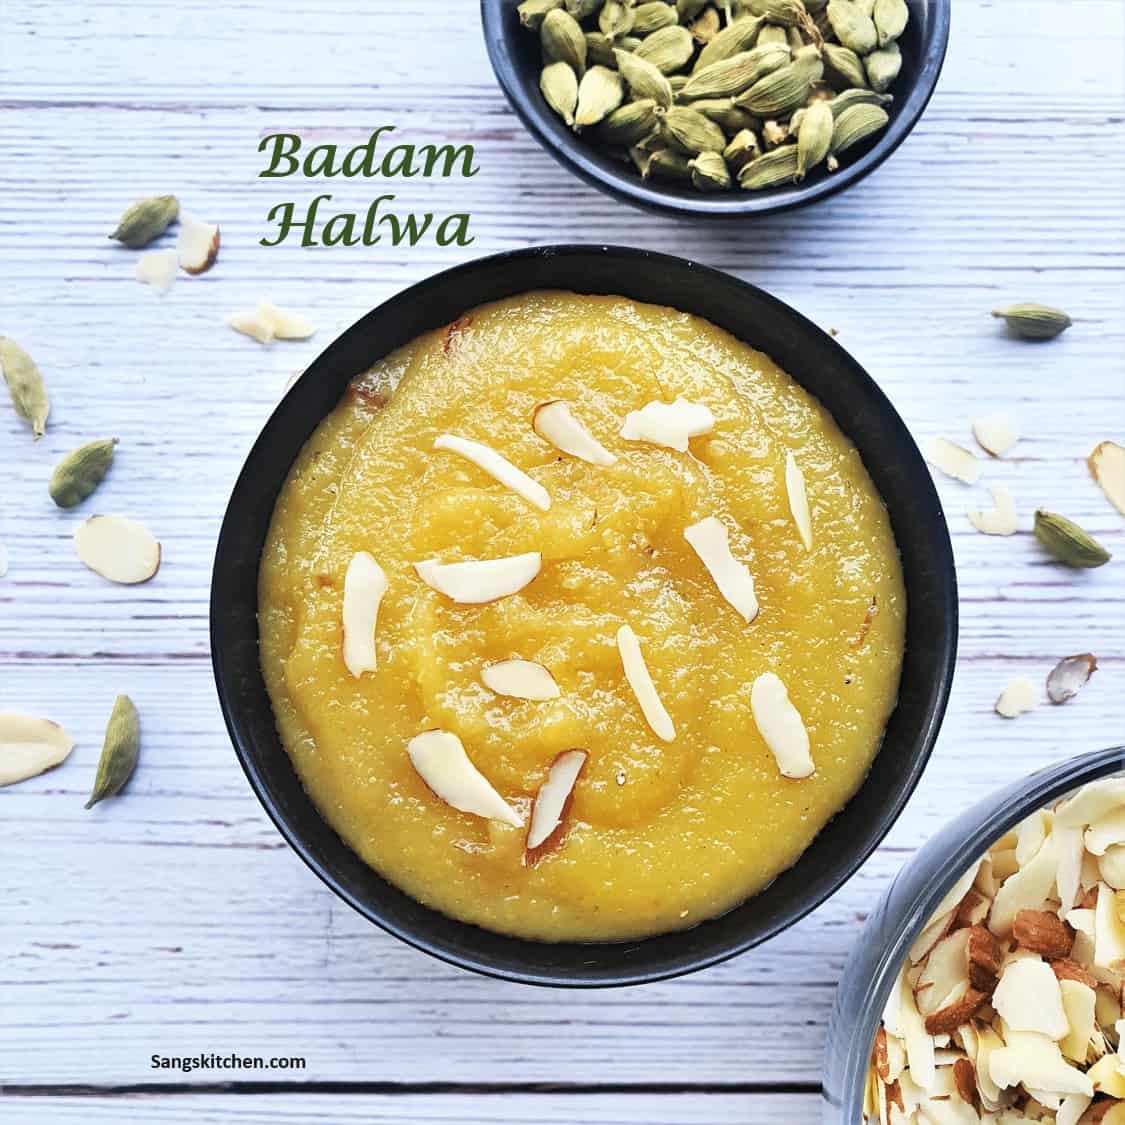 Badam halwa with Almond flour